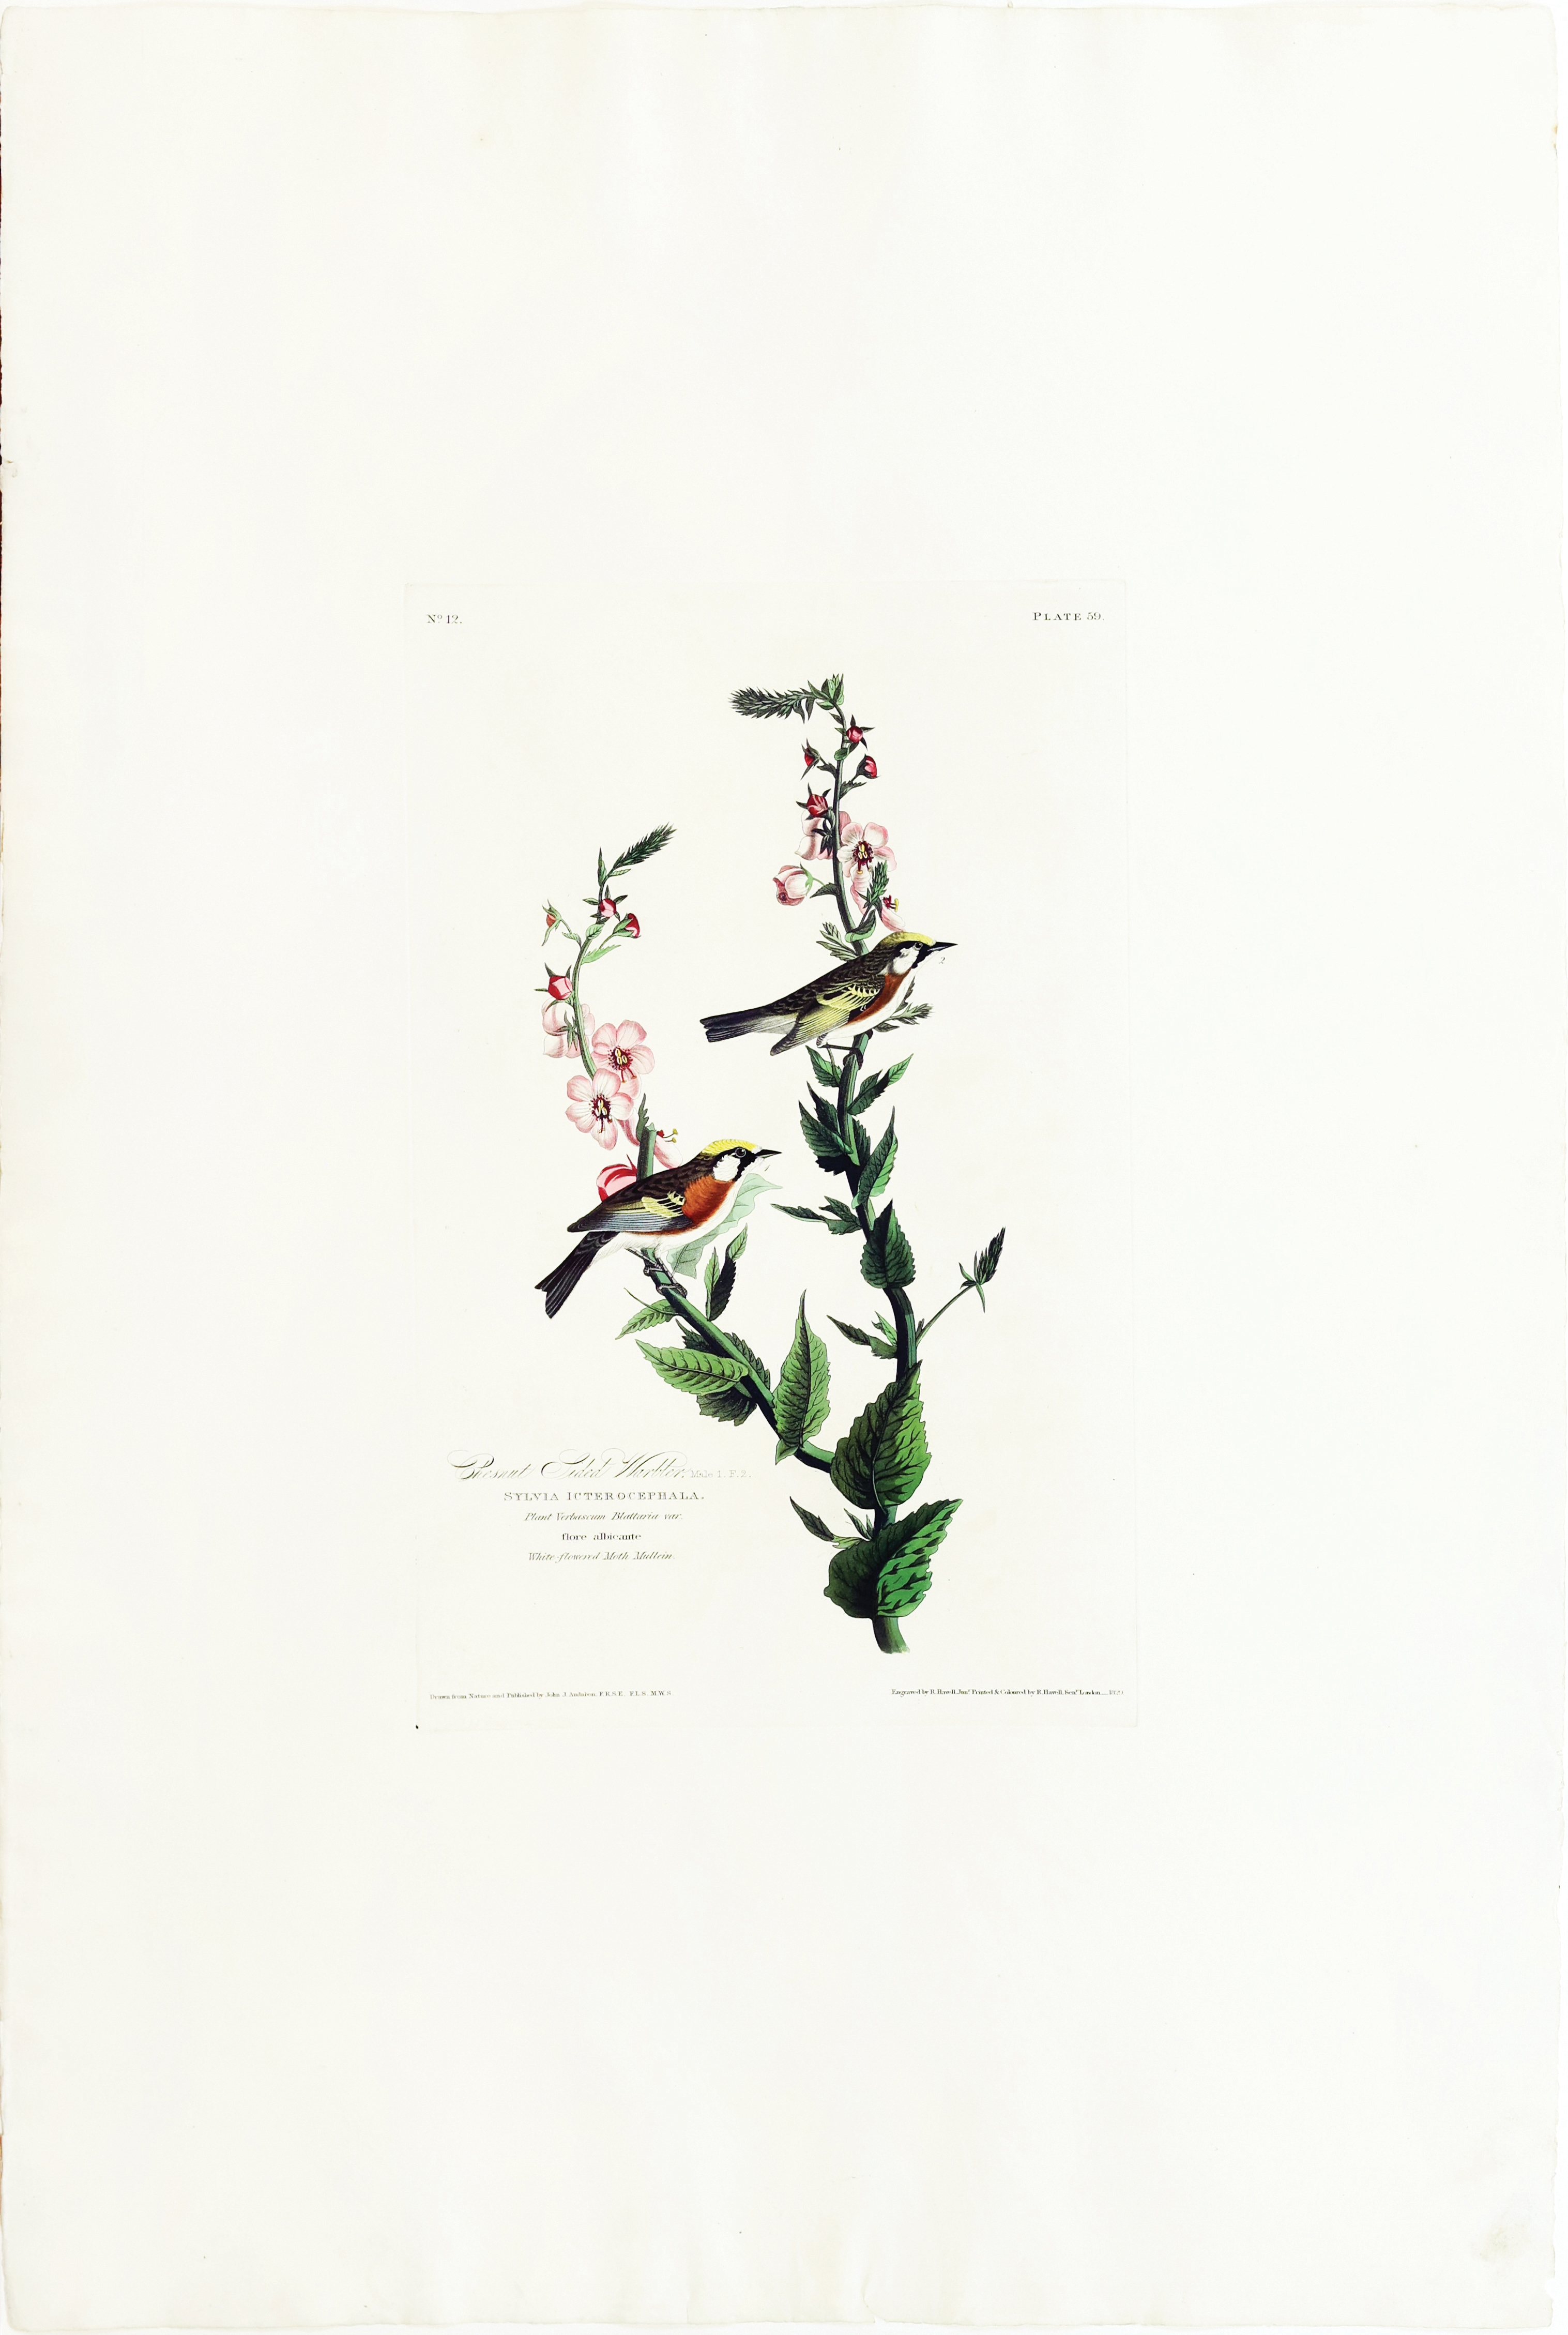 Audubon Aquatint, Chesnut-sided Warbler by John James Audubon